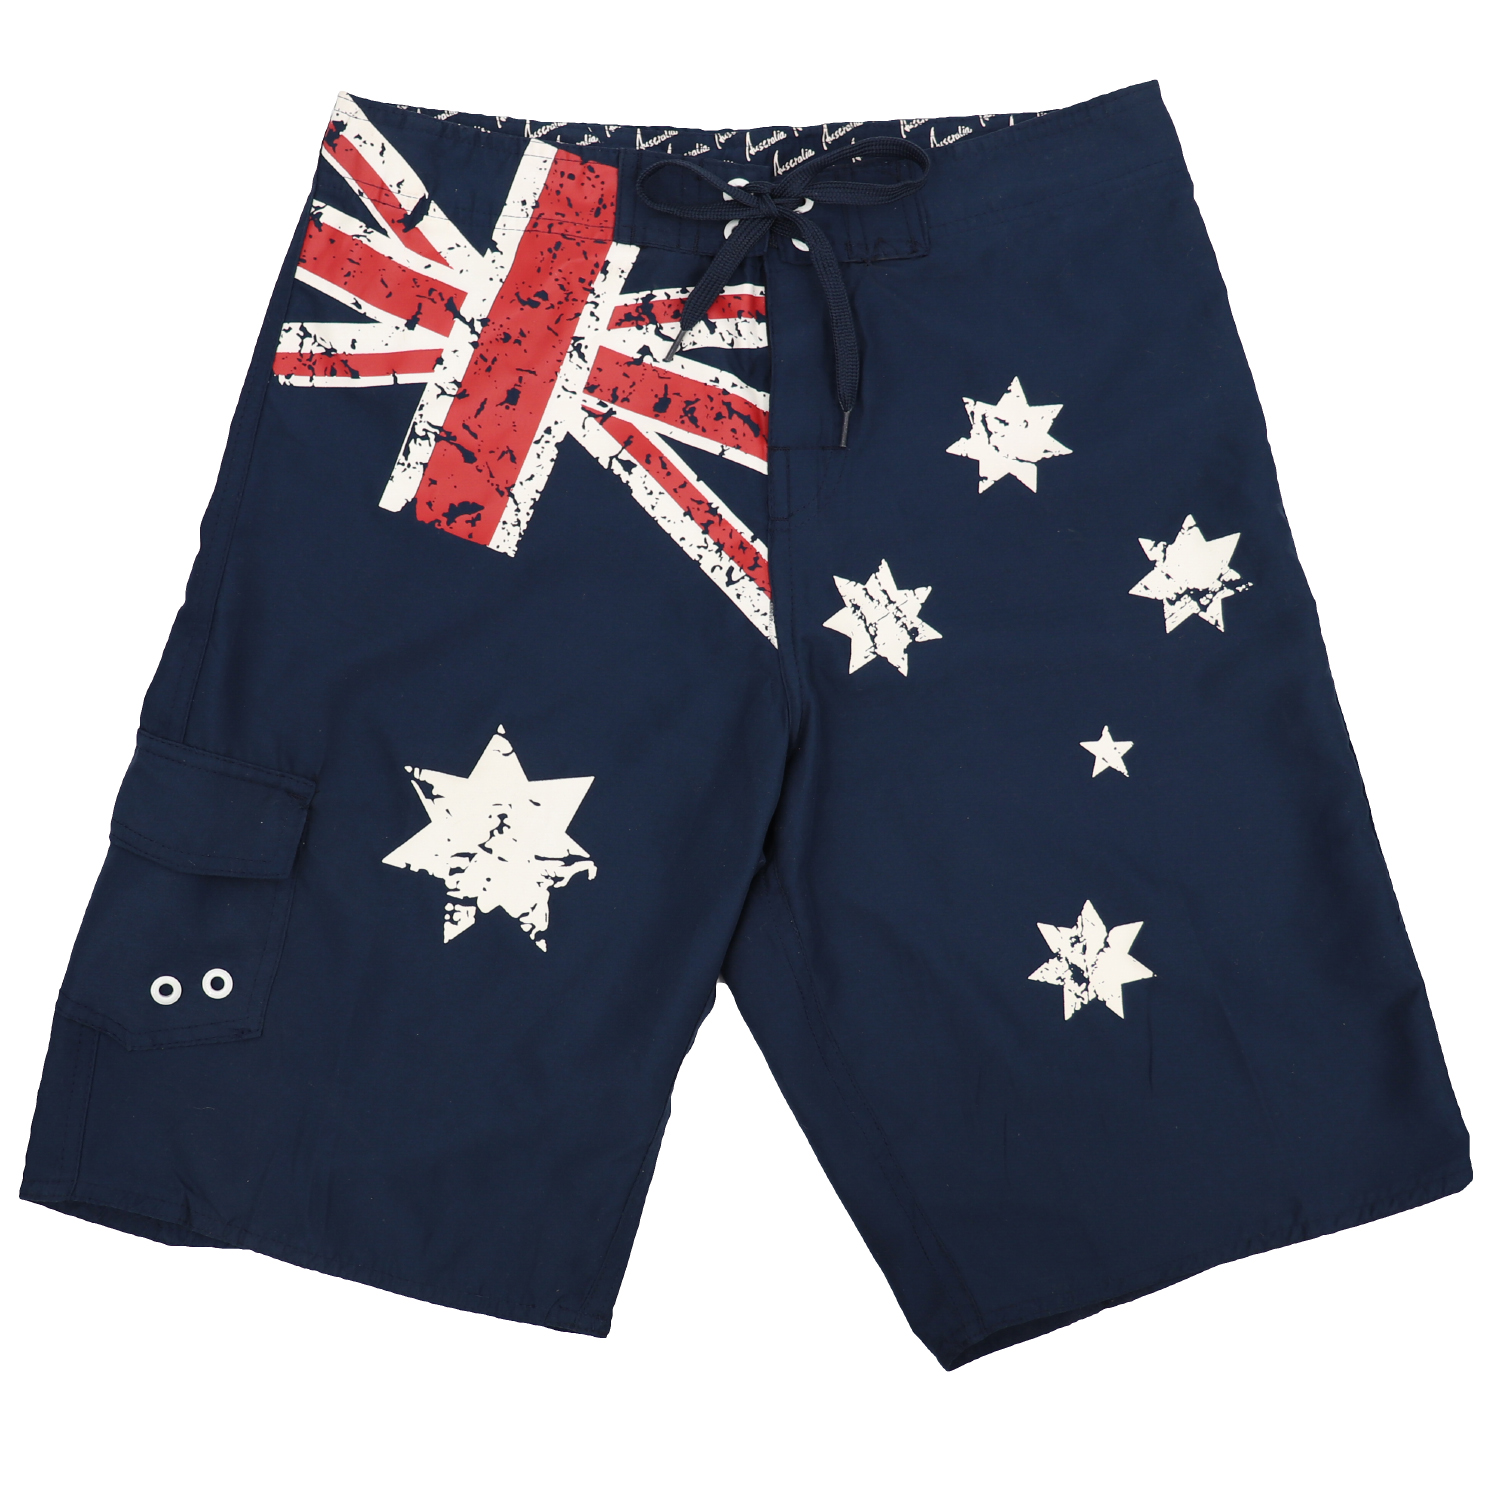 Men's Adult Board Shorts Australian Flag Australia Day Souvenir Navy Beach Wear